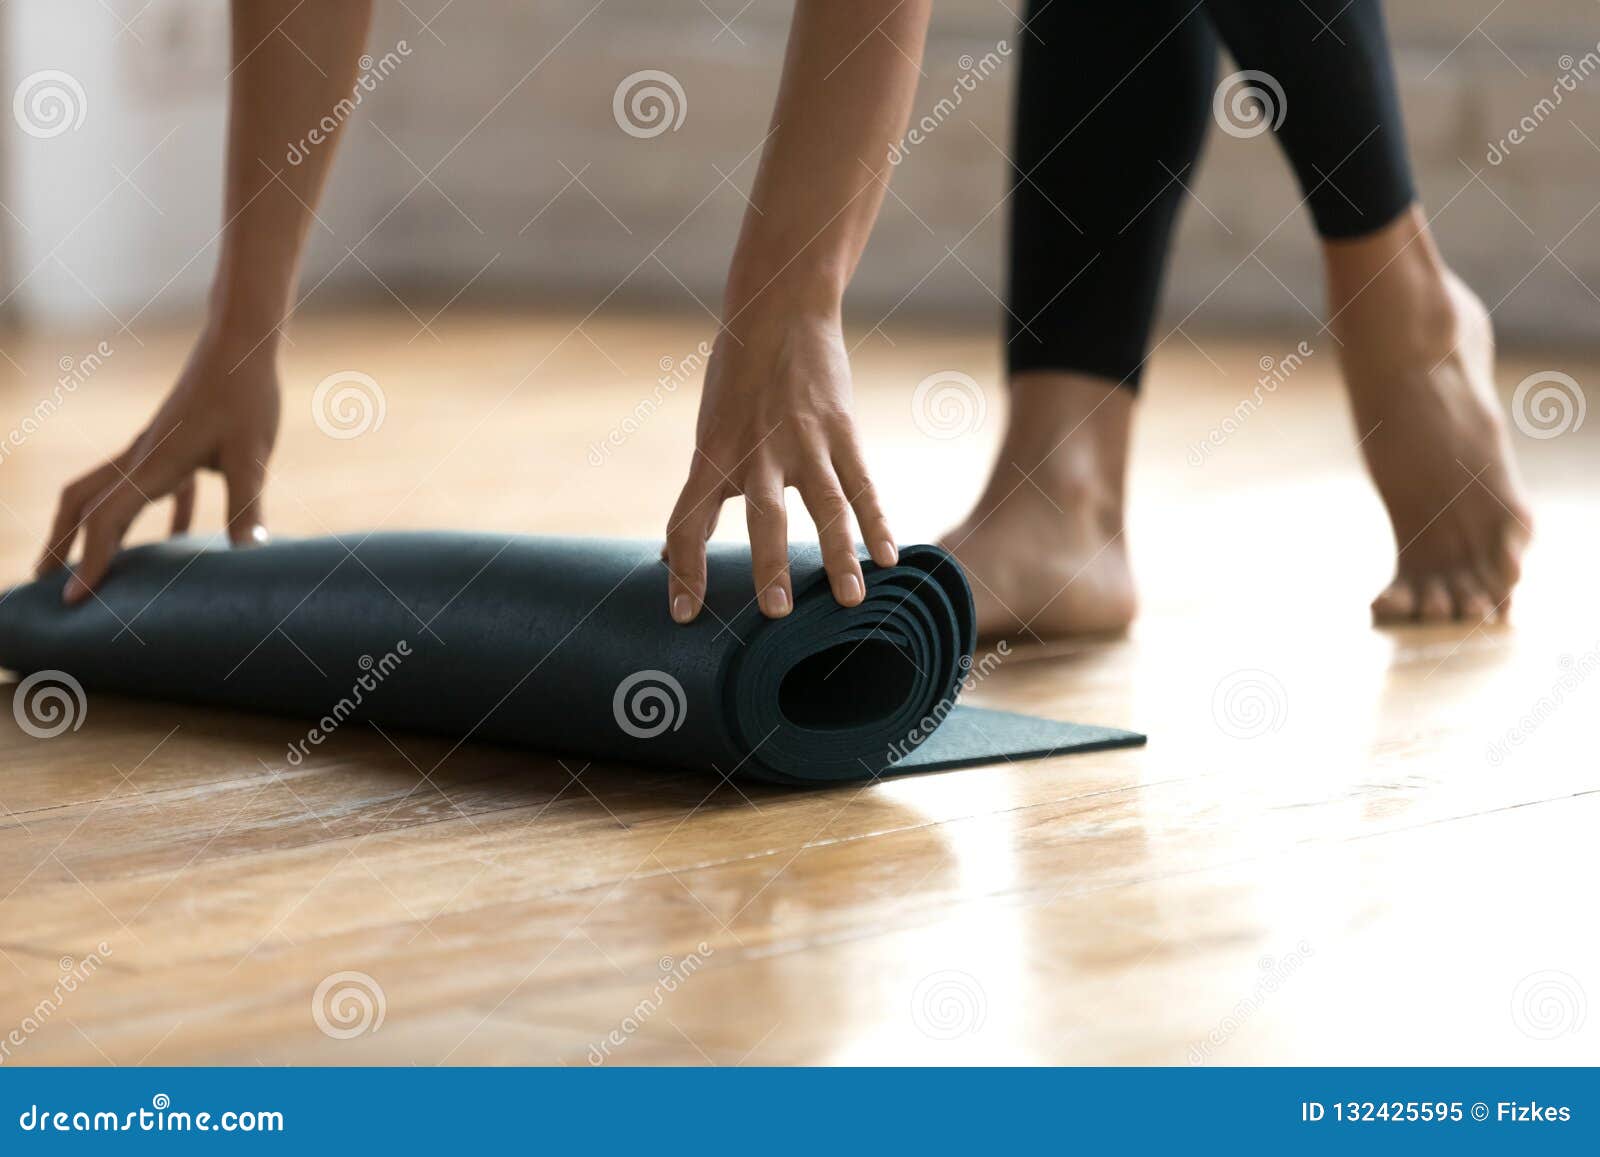 Close Up Female Hands Folding Black Rubber Yoga Mat Stock Image